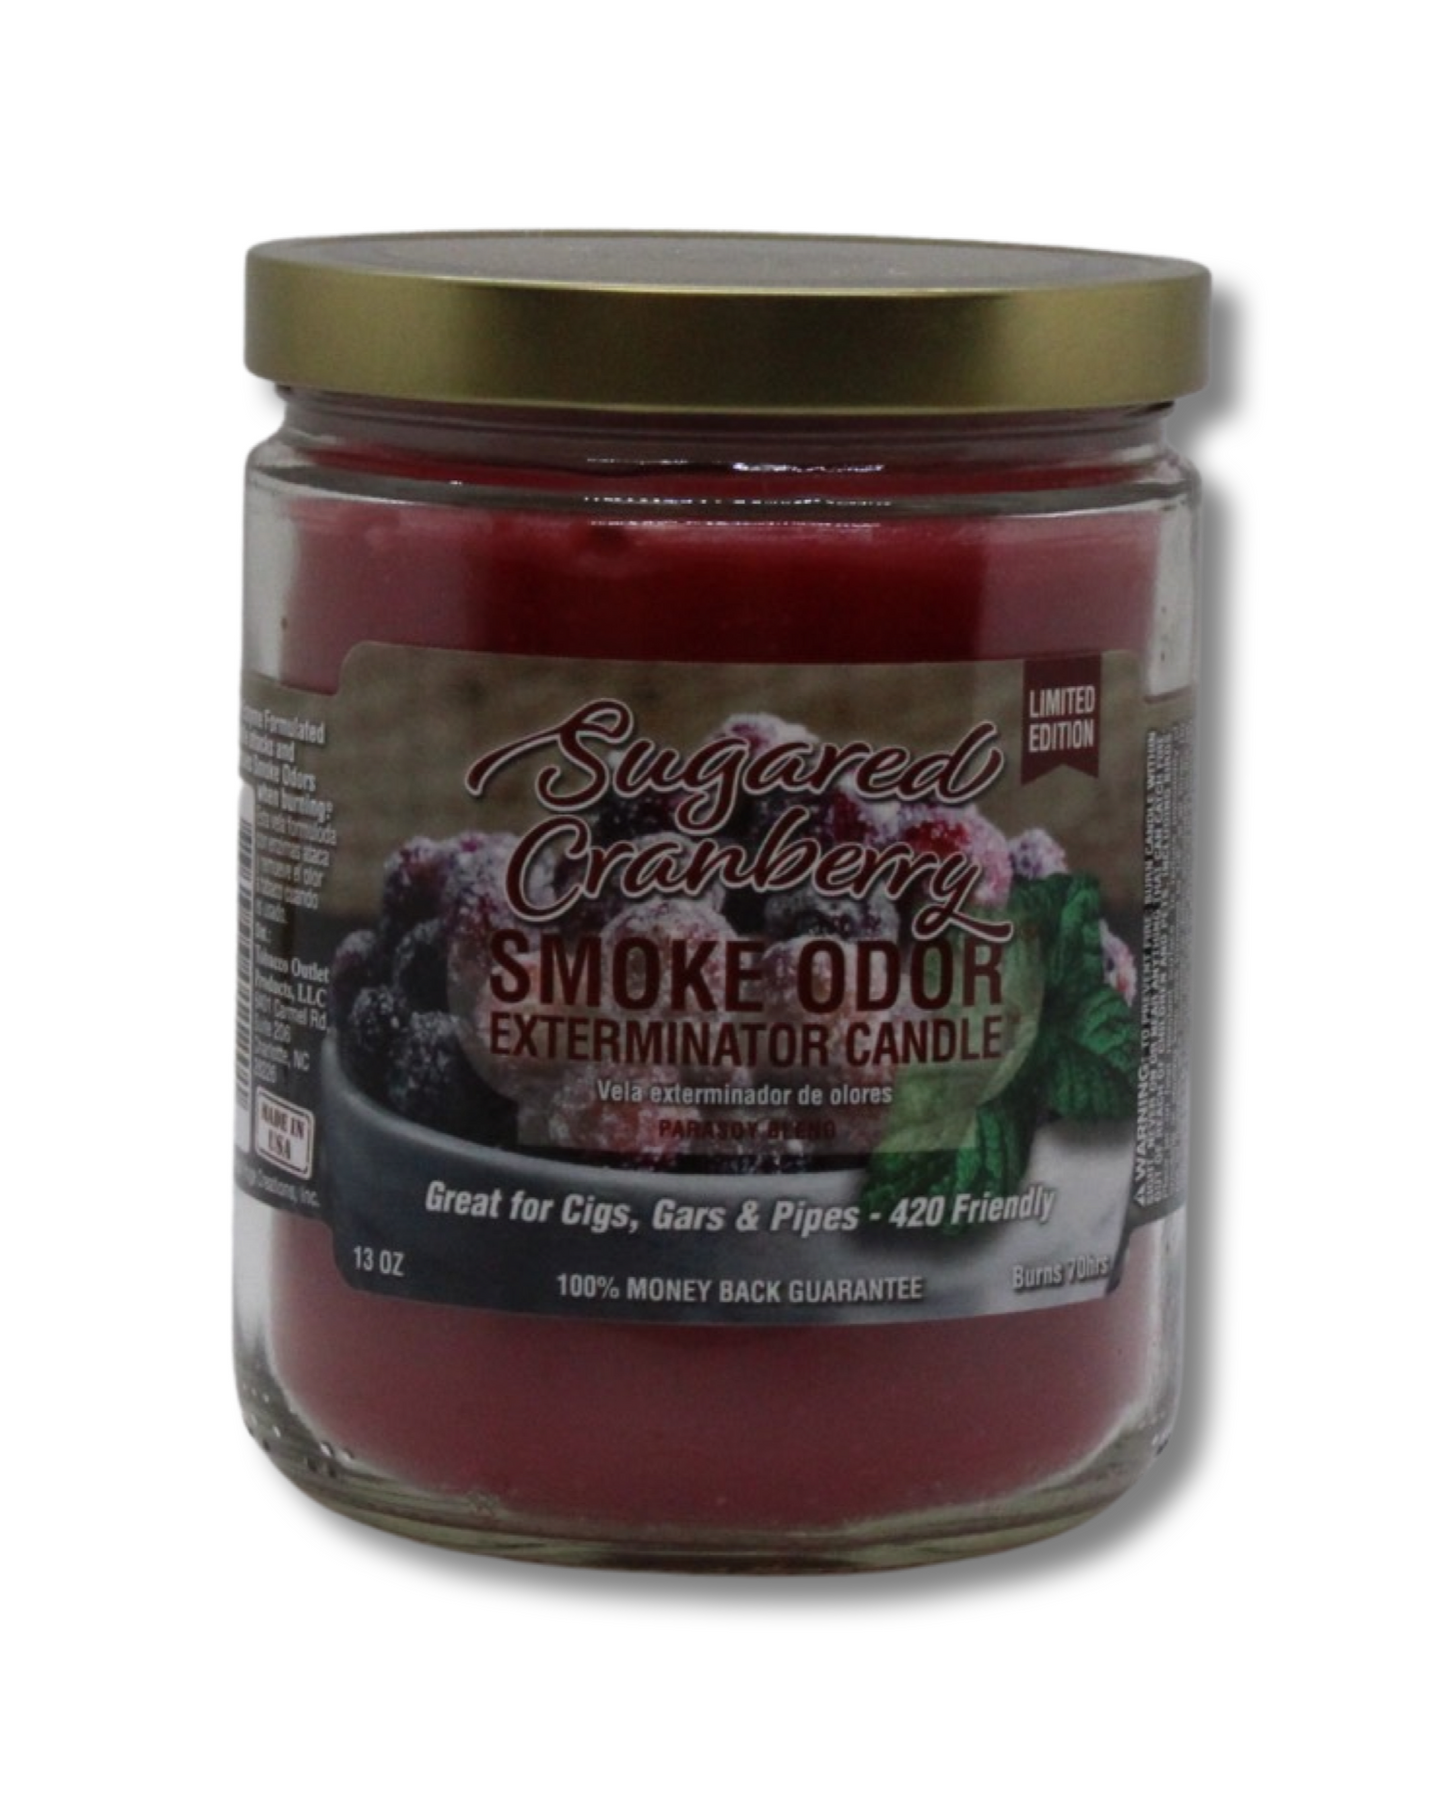 Smoke Odor Exterminator Candle Sugared Cranberry